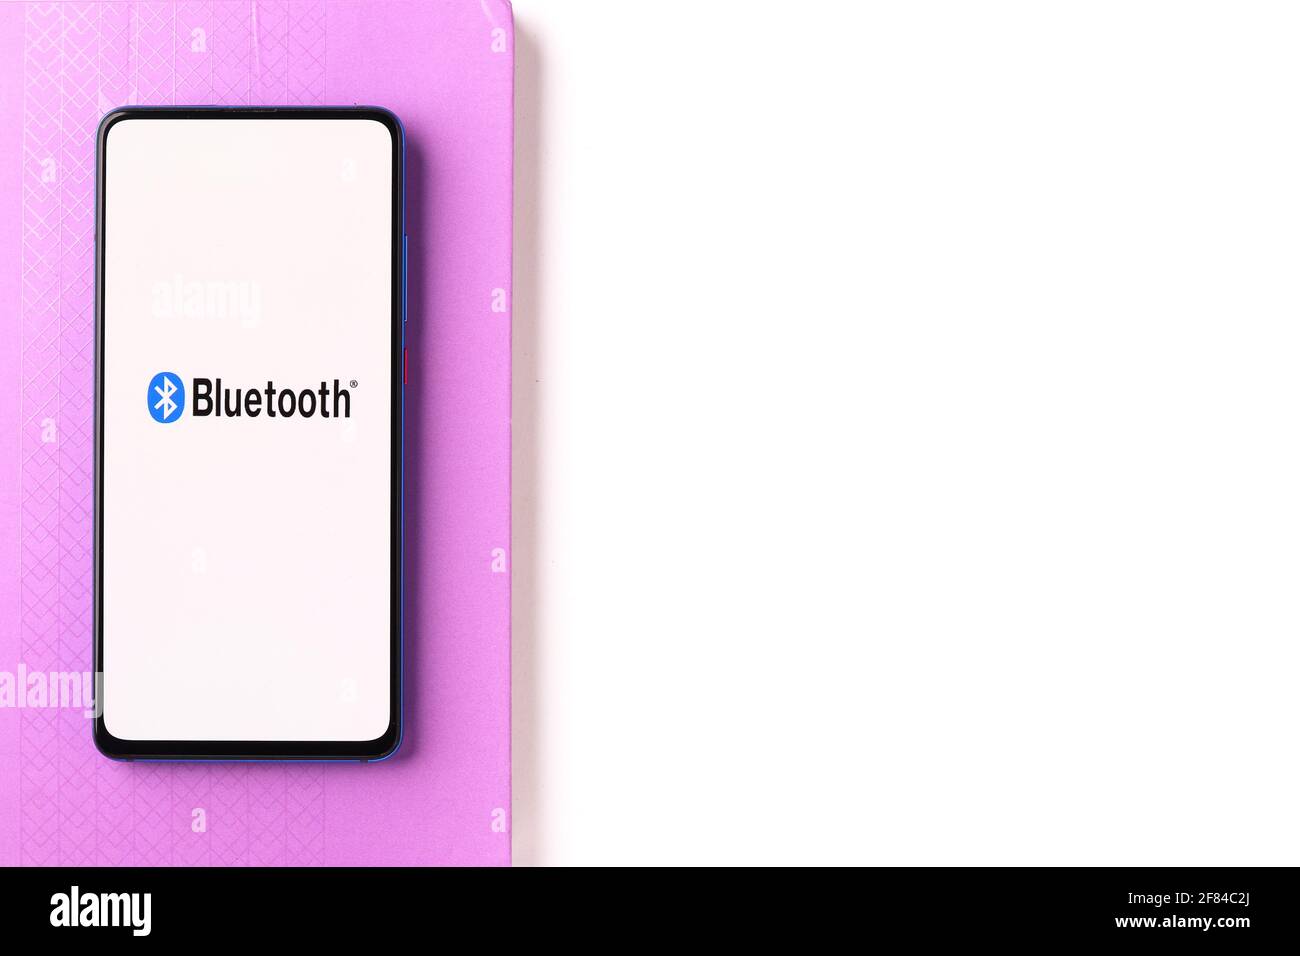 Assam, india - April 10, 2021 : Bluetooth logo on phone screen stock image. Stock Photo